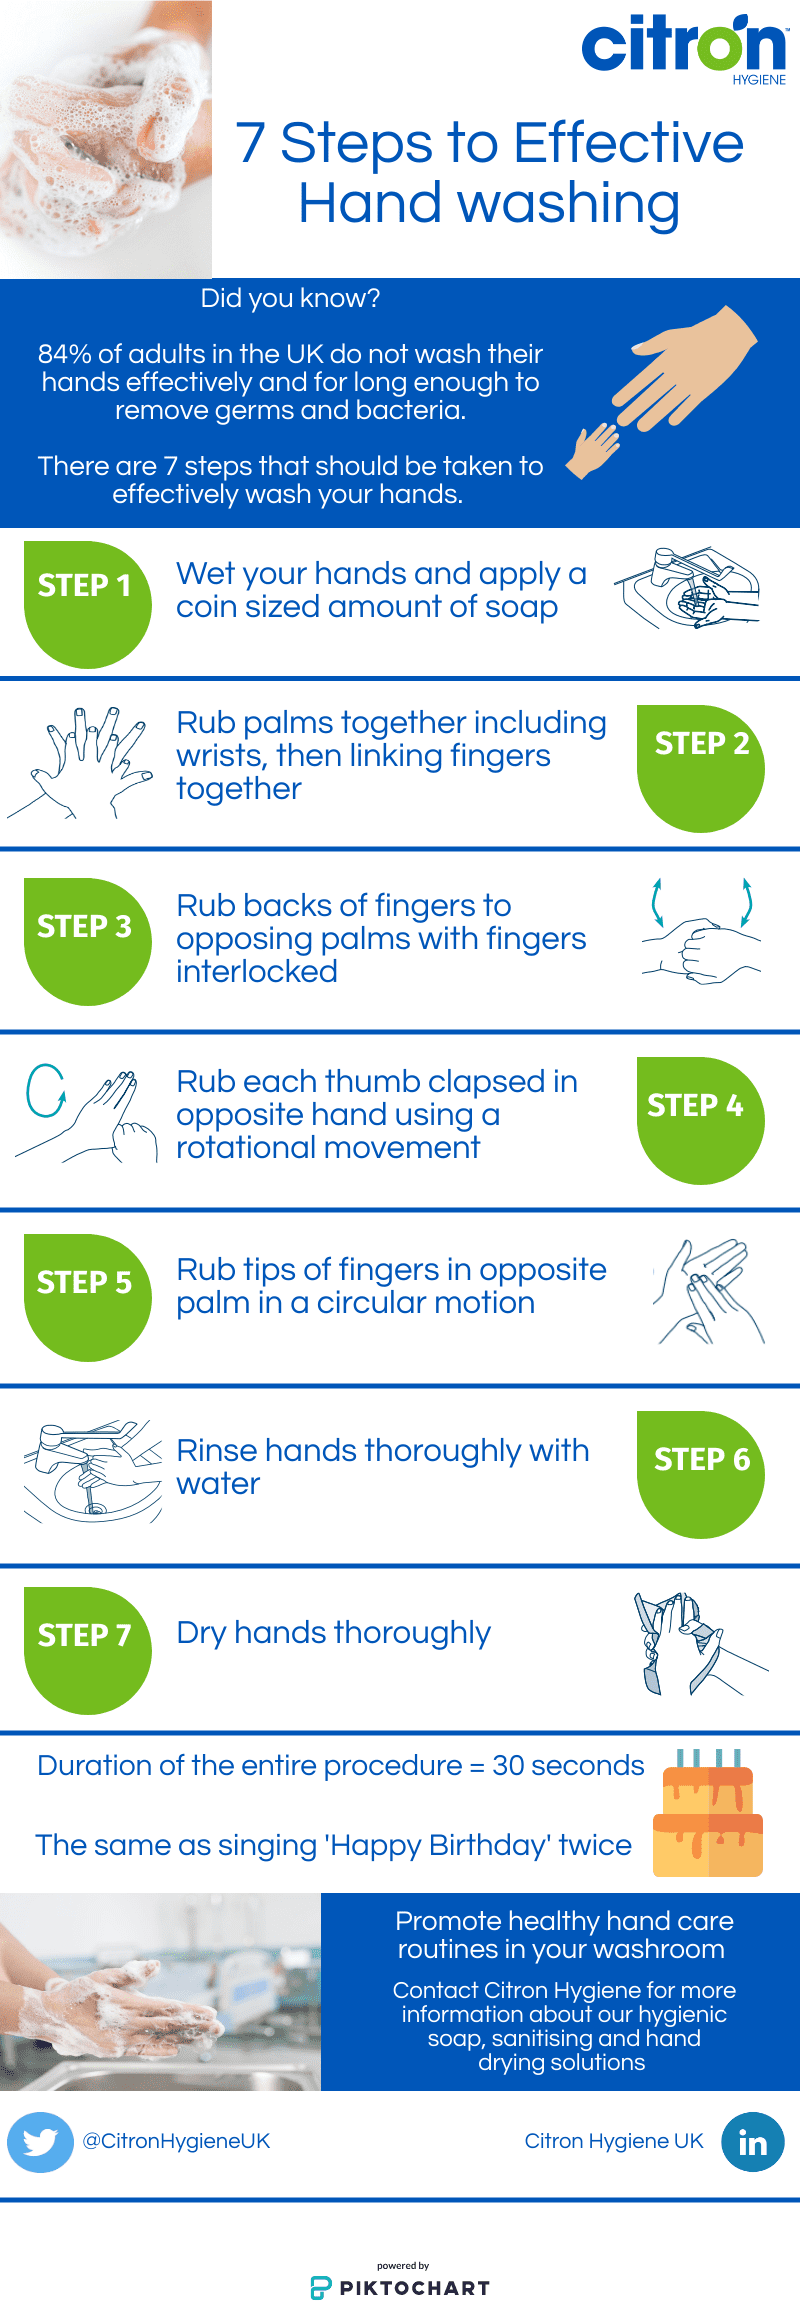 citron hygiene hand washing info graphic